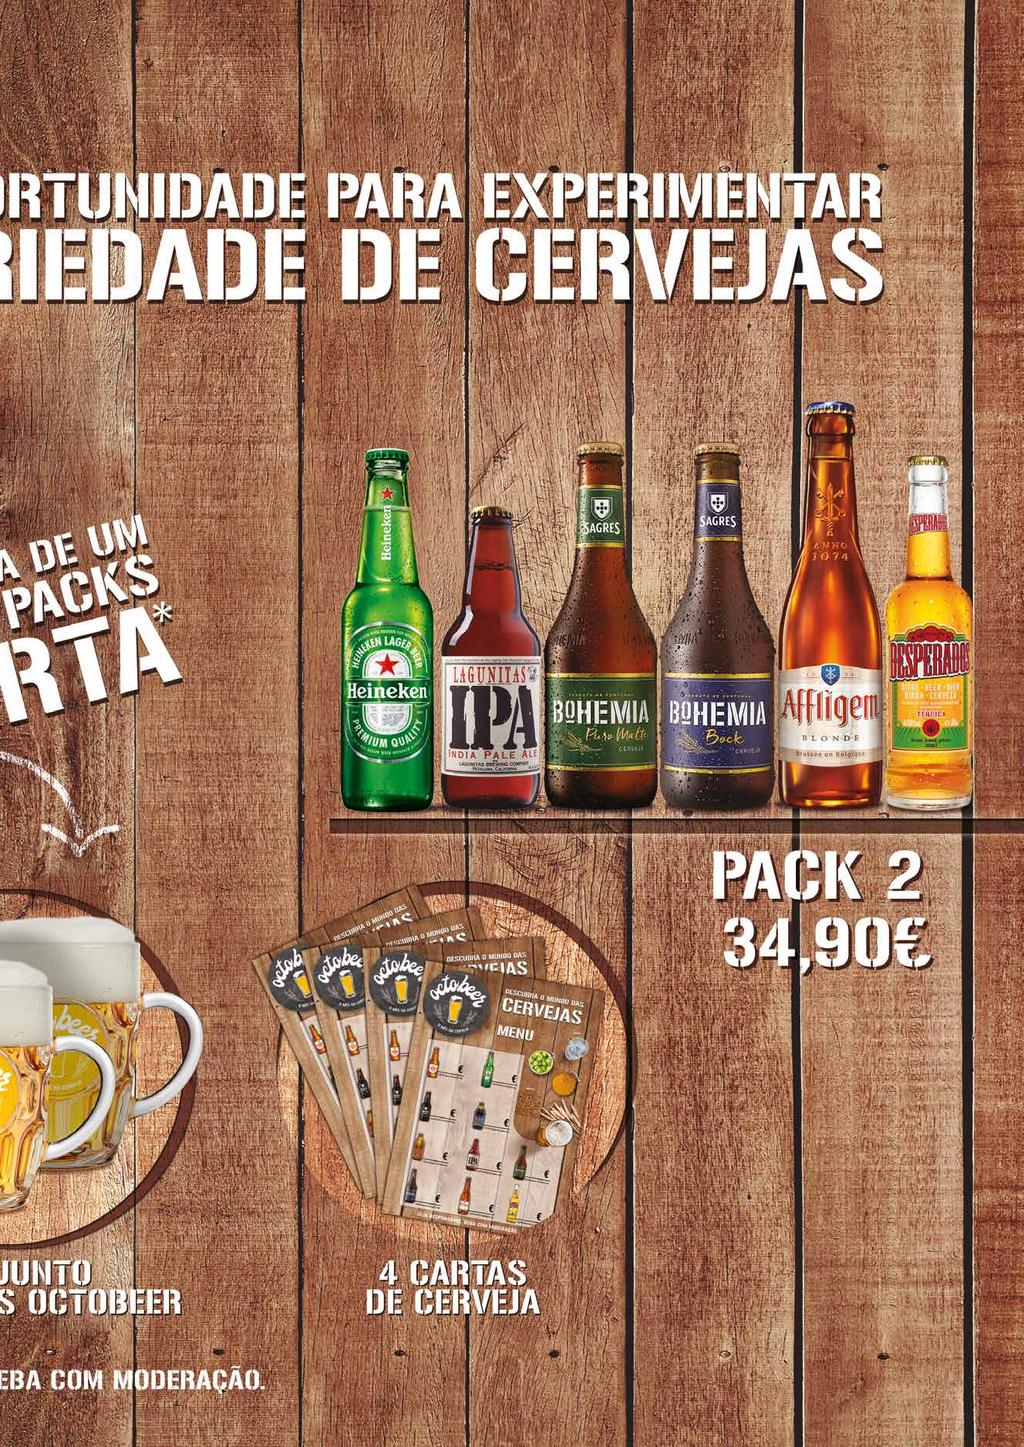 1 tab de Heineken Branca 0,25 cl TP 1-6 Pack de Lagunitas 0,355 cl TP 1-6 pack de Bohemia Puro Malte 0,33 cl TP 1-6 Pack de